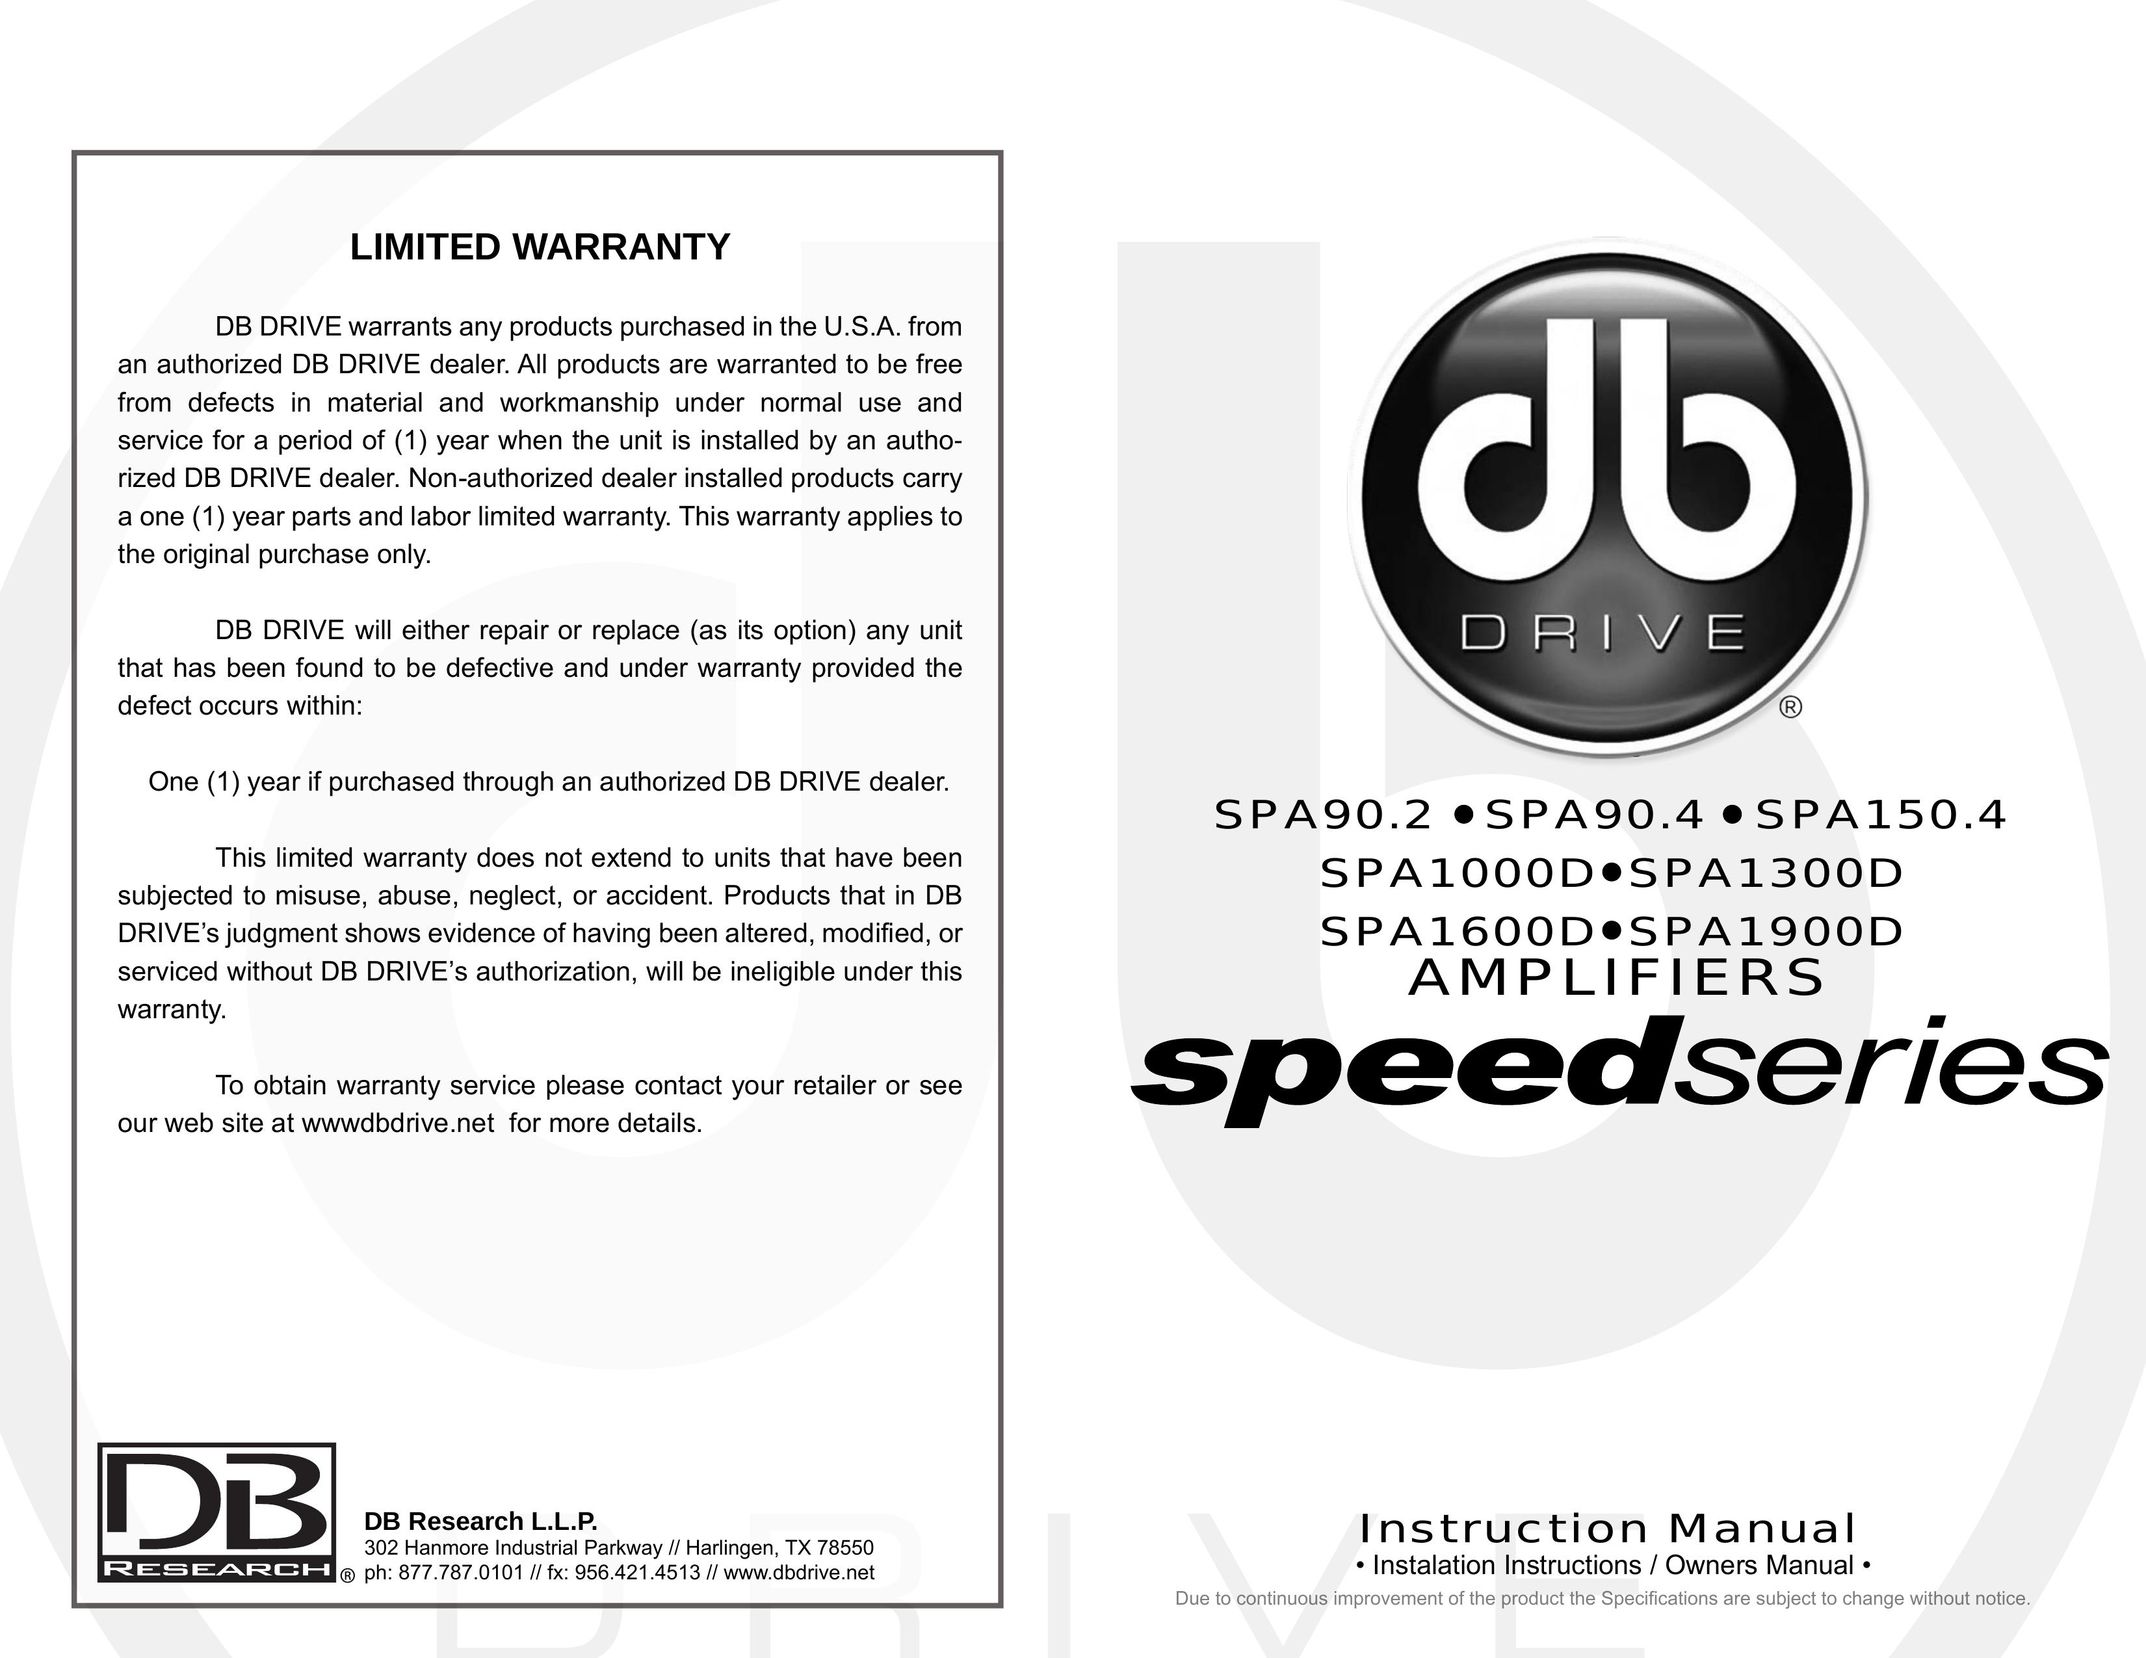 Broan SPA1300D Car Amplifier User Manual